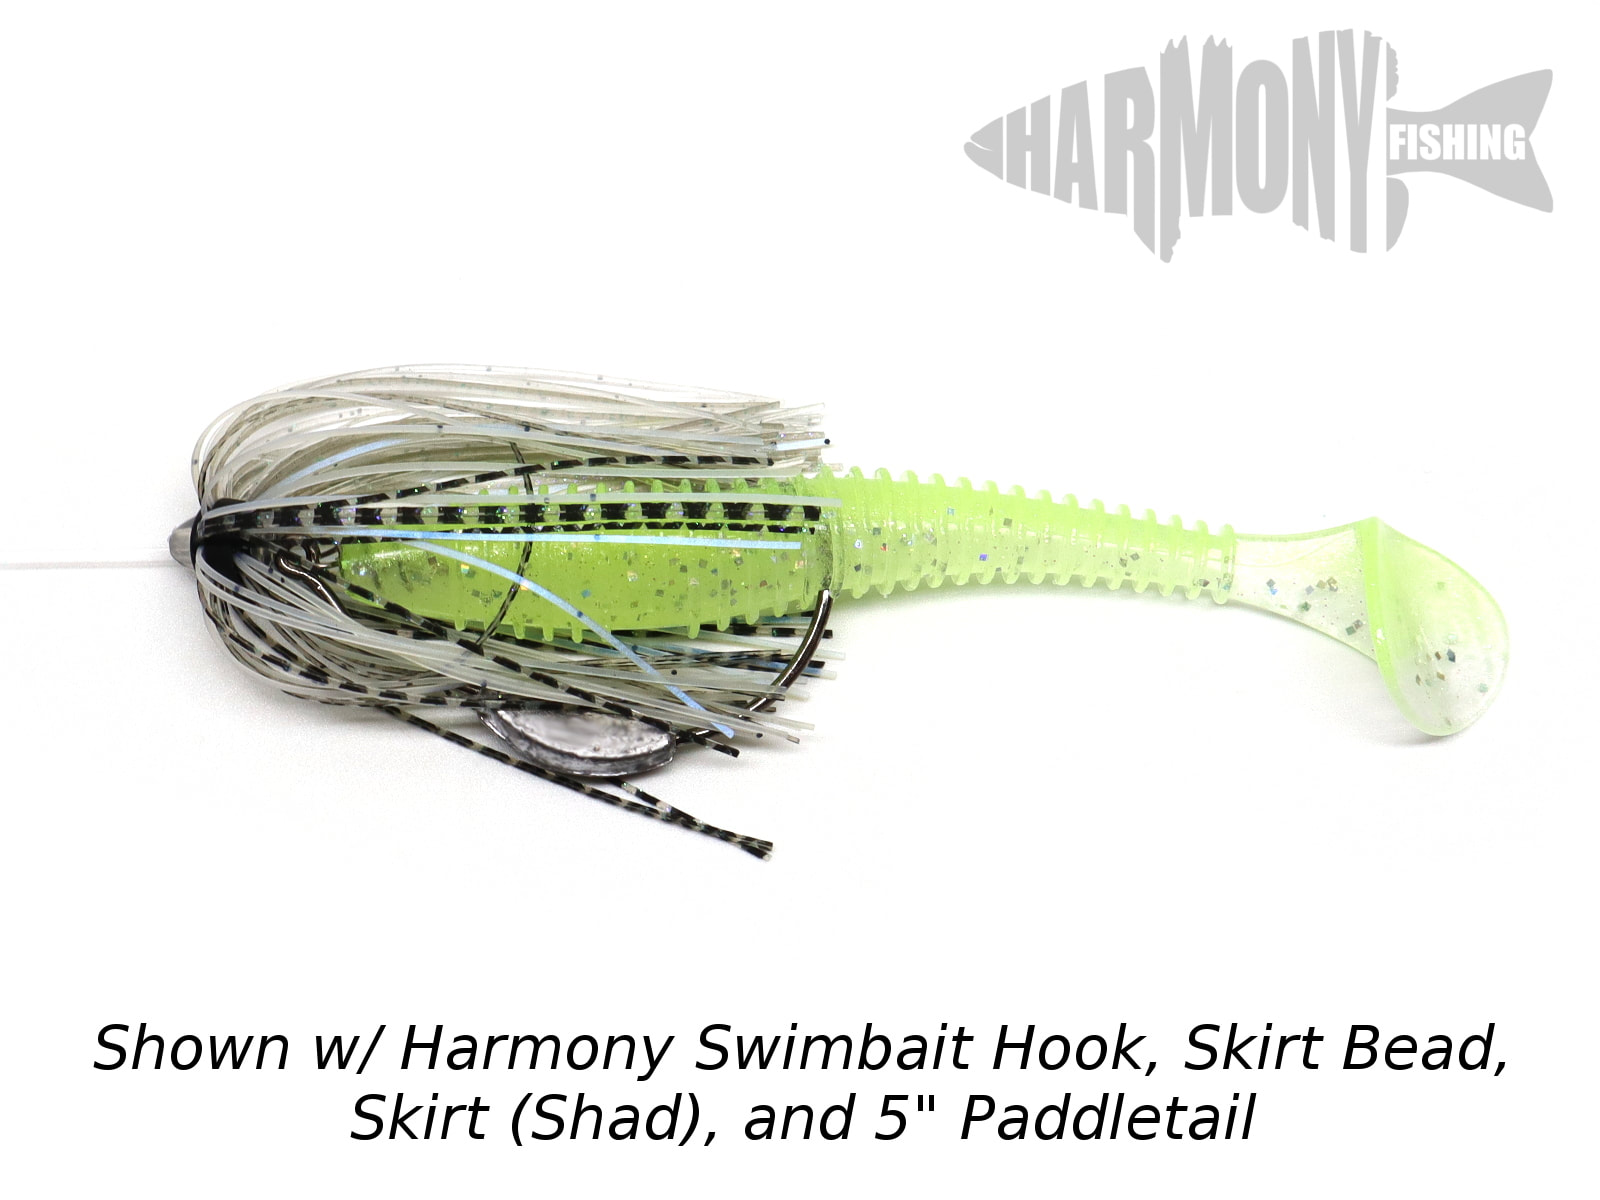 How To Rig Skirt Beads - Harmony Fishing Company